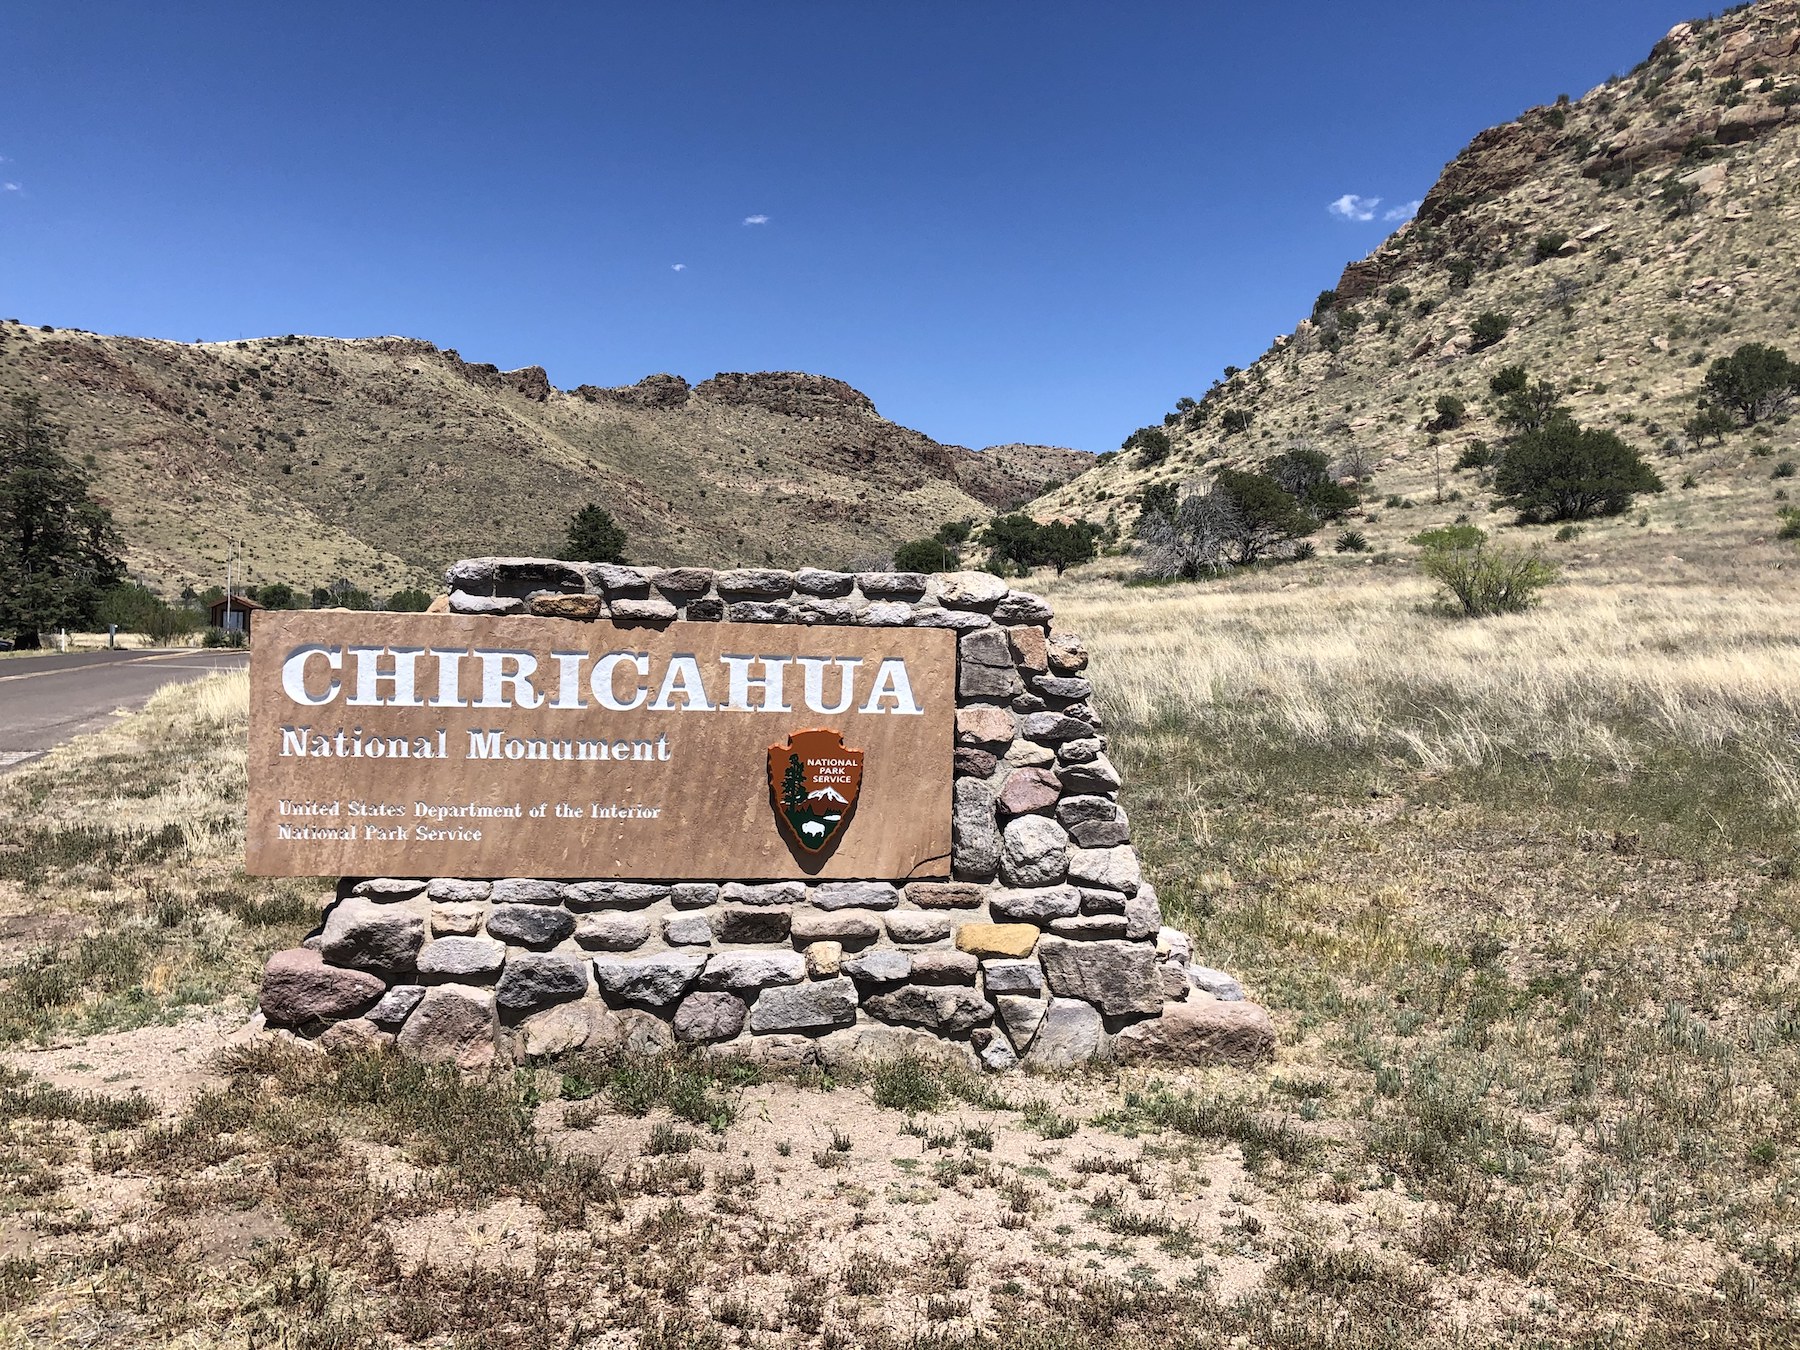 Monumento nacional de Chiricahua: 9 cosas que saber antes de visitar - 3